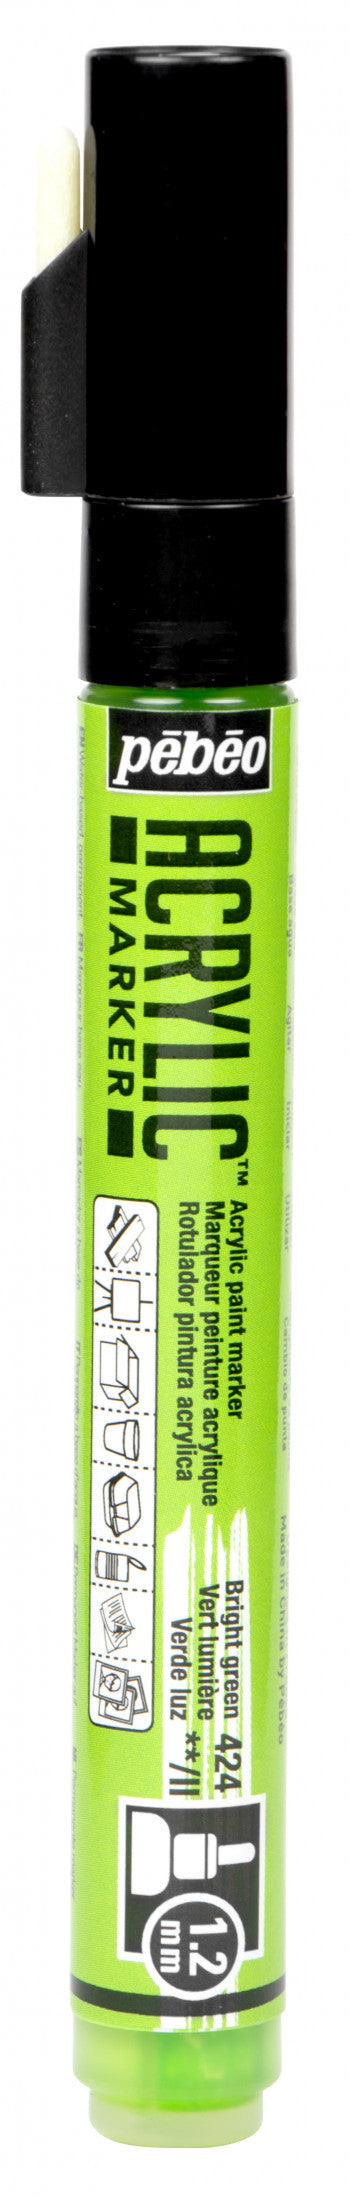 Acrylic Marker 1.2mm Pebeo Light green - 424